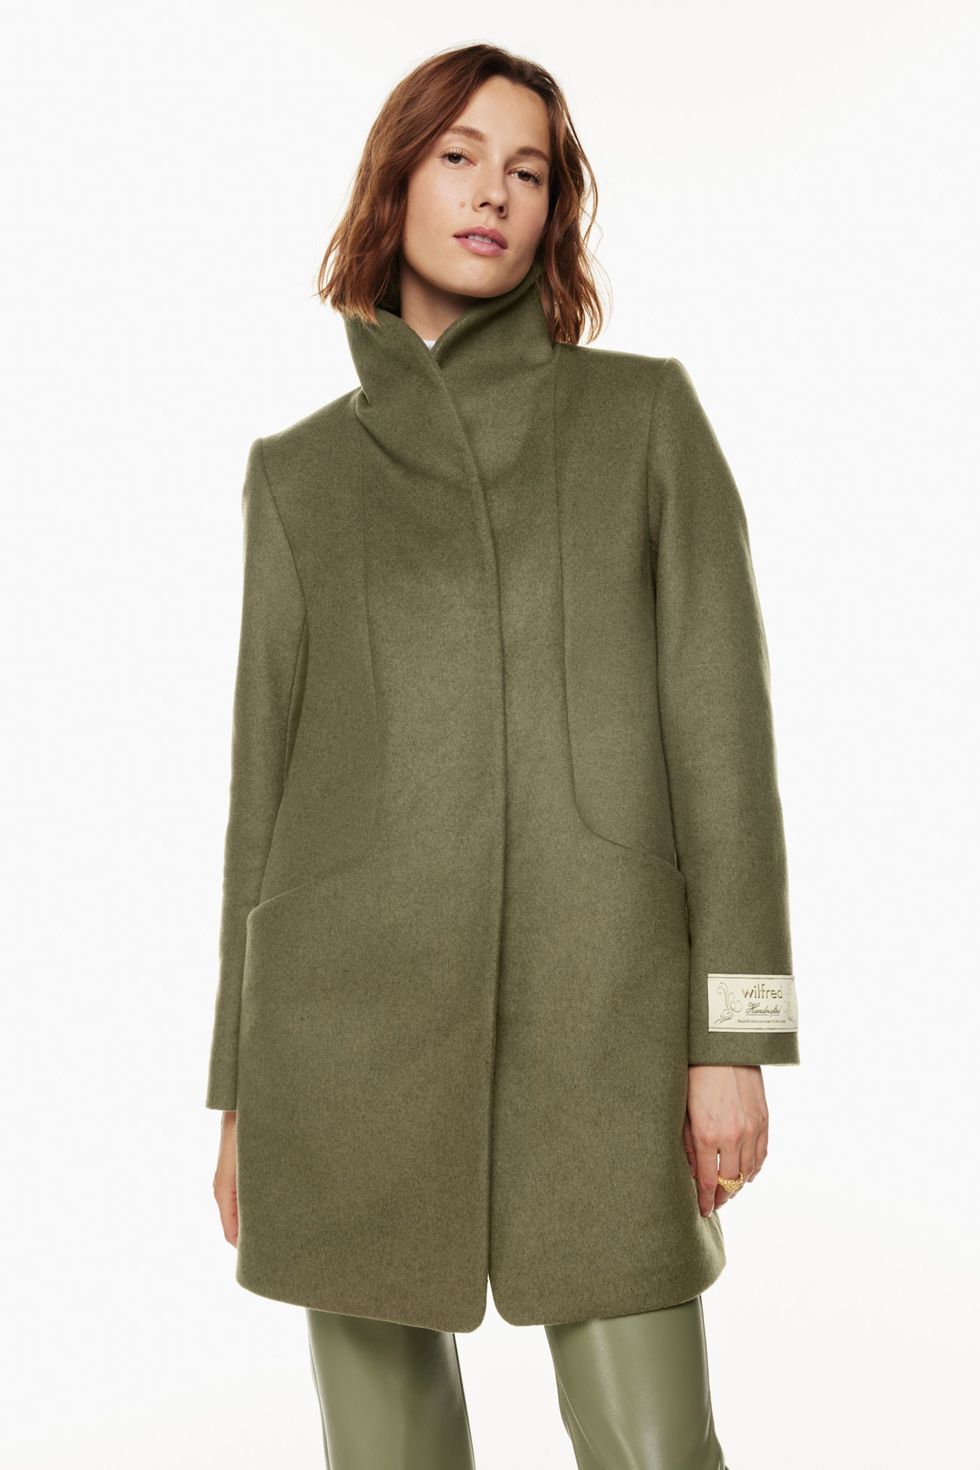 Awesome And Elegant Designer Women's Winter Coats /Wool Coats